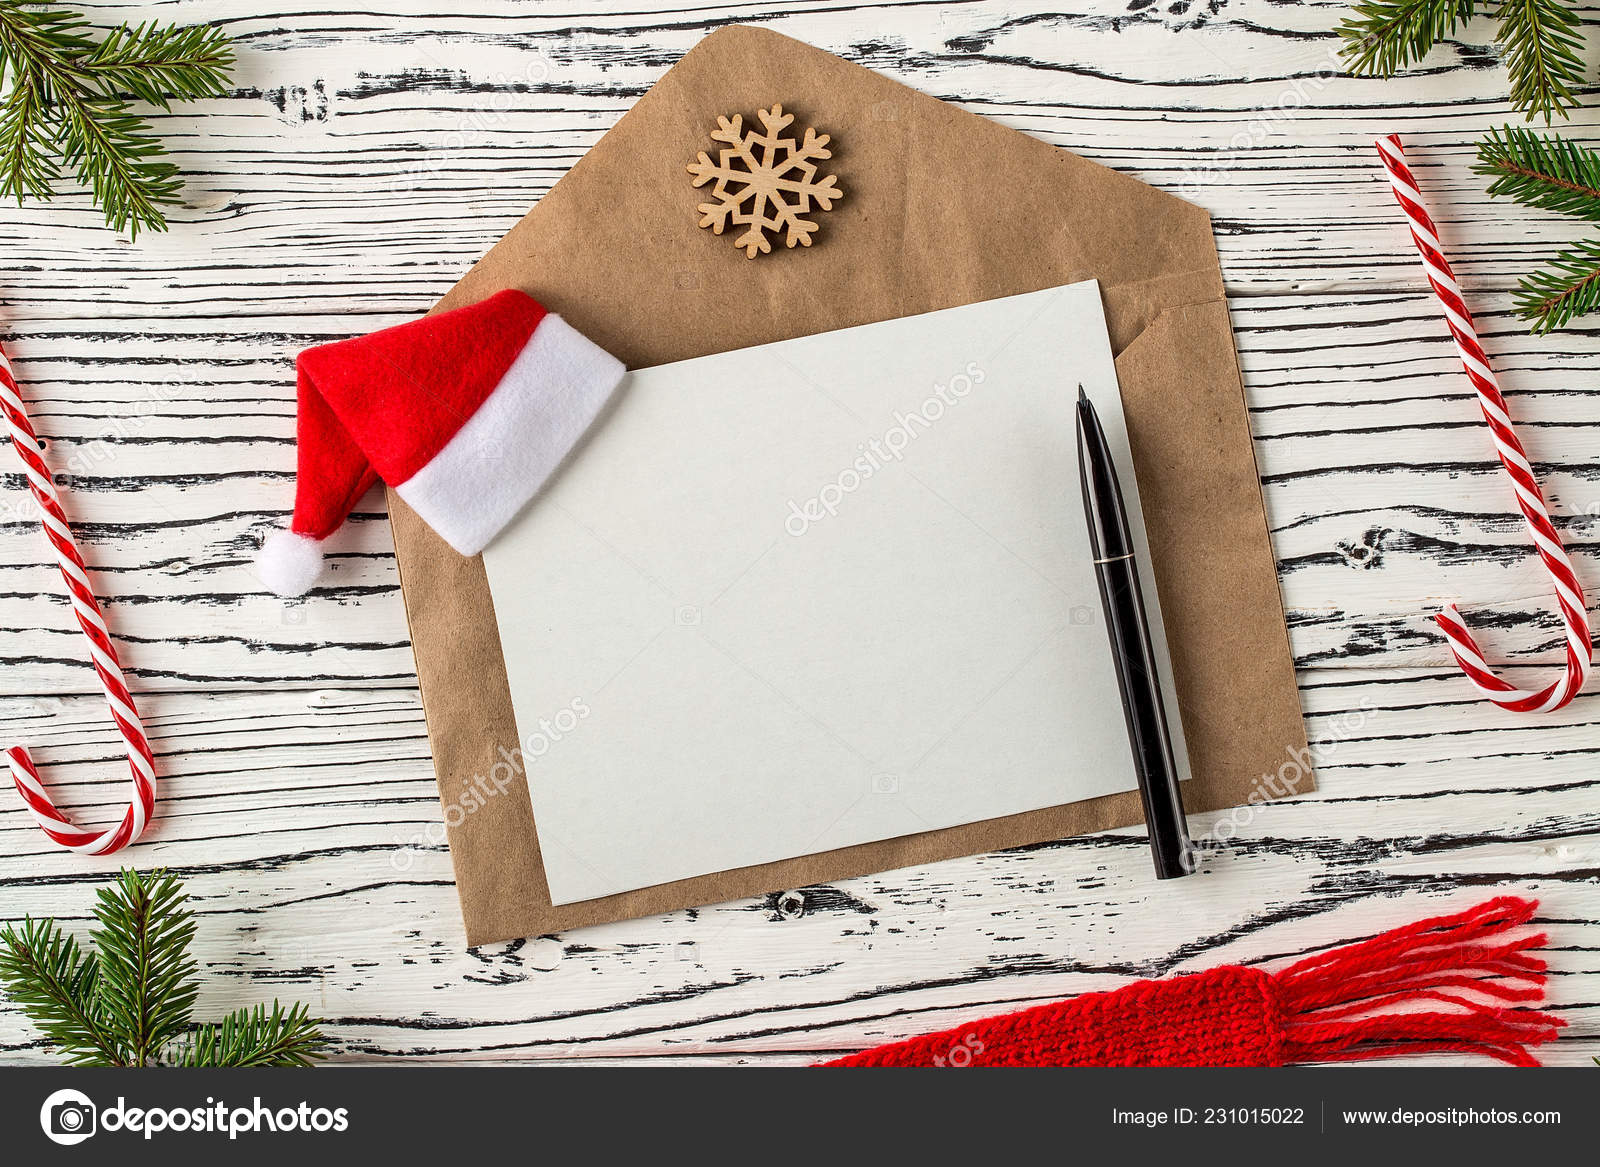 https://st4.depositphotos.com/2876627/23101/i/1600/depositphotos_231015022-stock-photo-christmas-mail-envelopes-with-letters.jpg